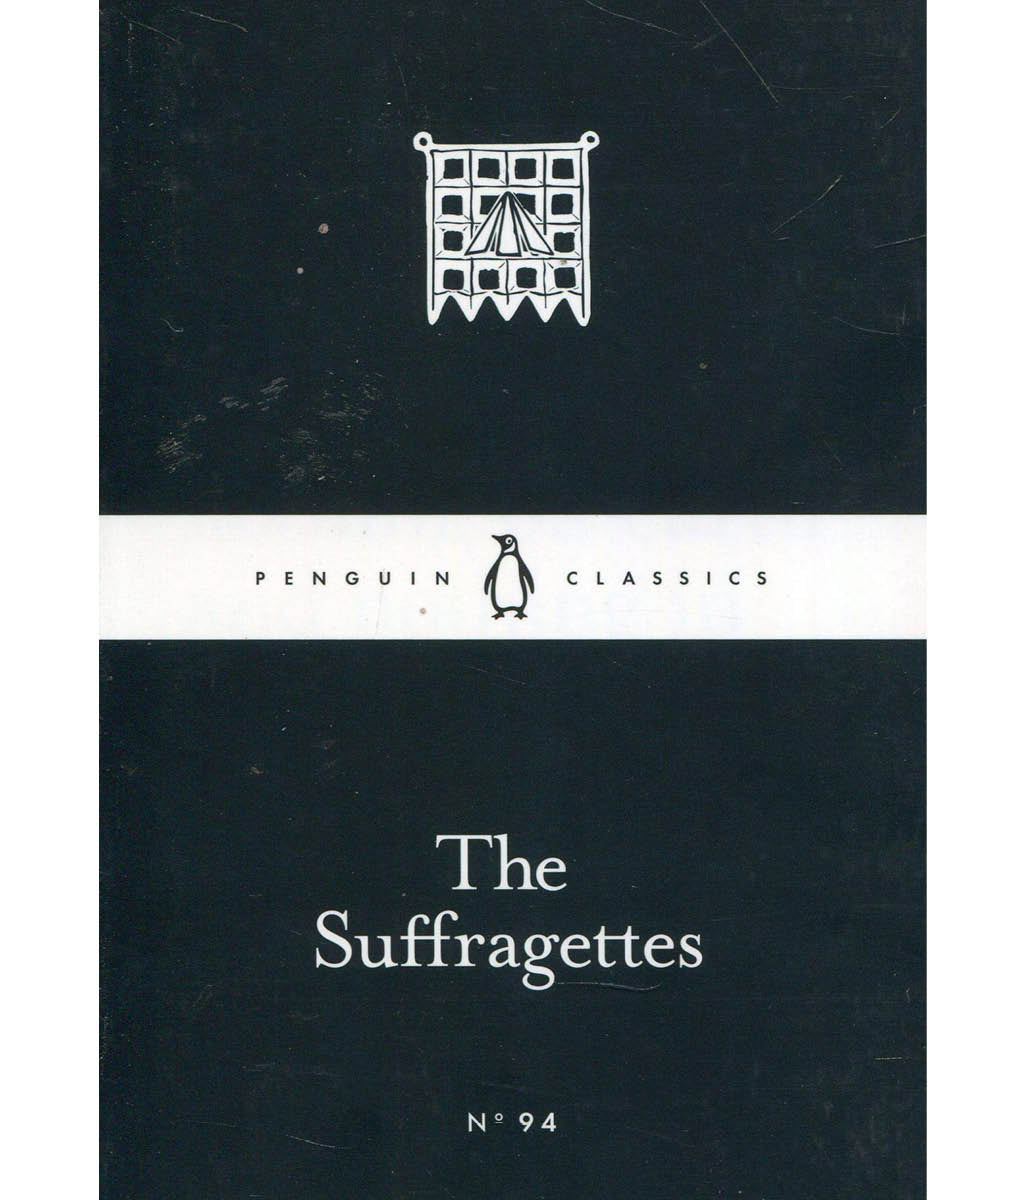 The Suffragettes by Penguin Little Black Classics